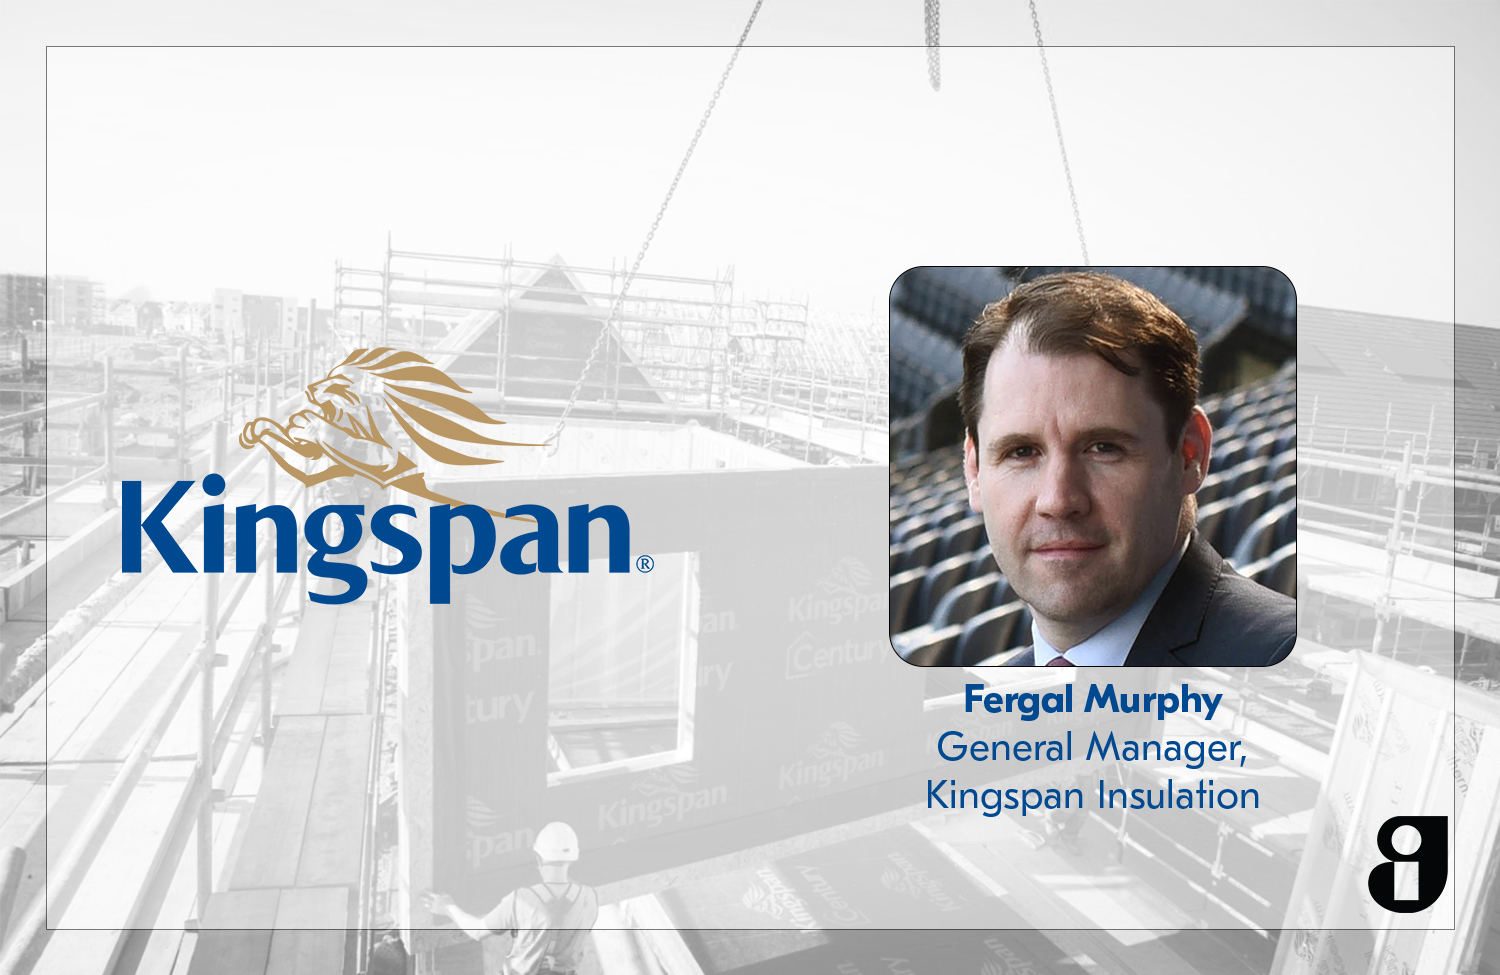 Fergal Murphy, General Manager, Kingspan Insulation